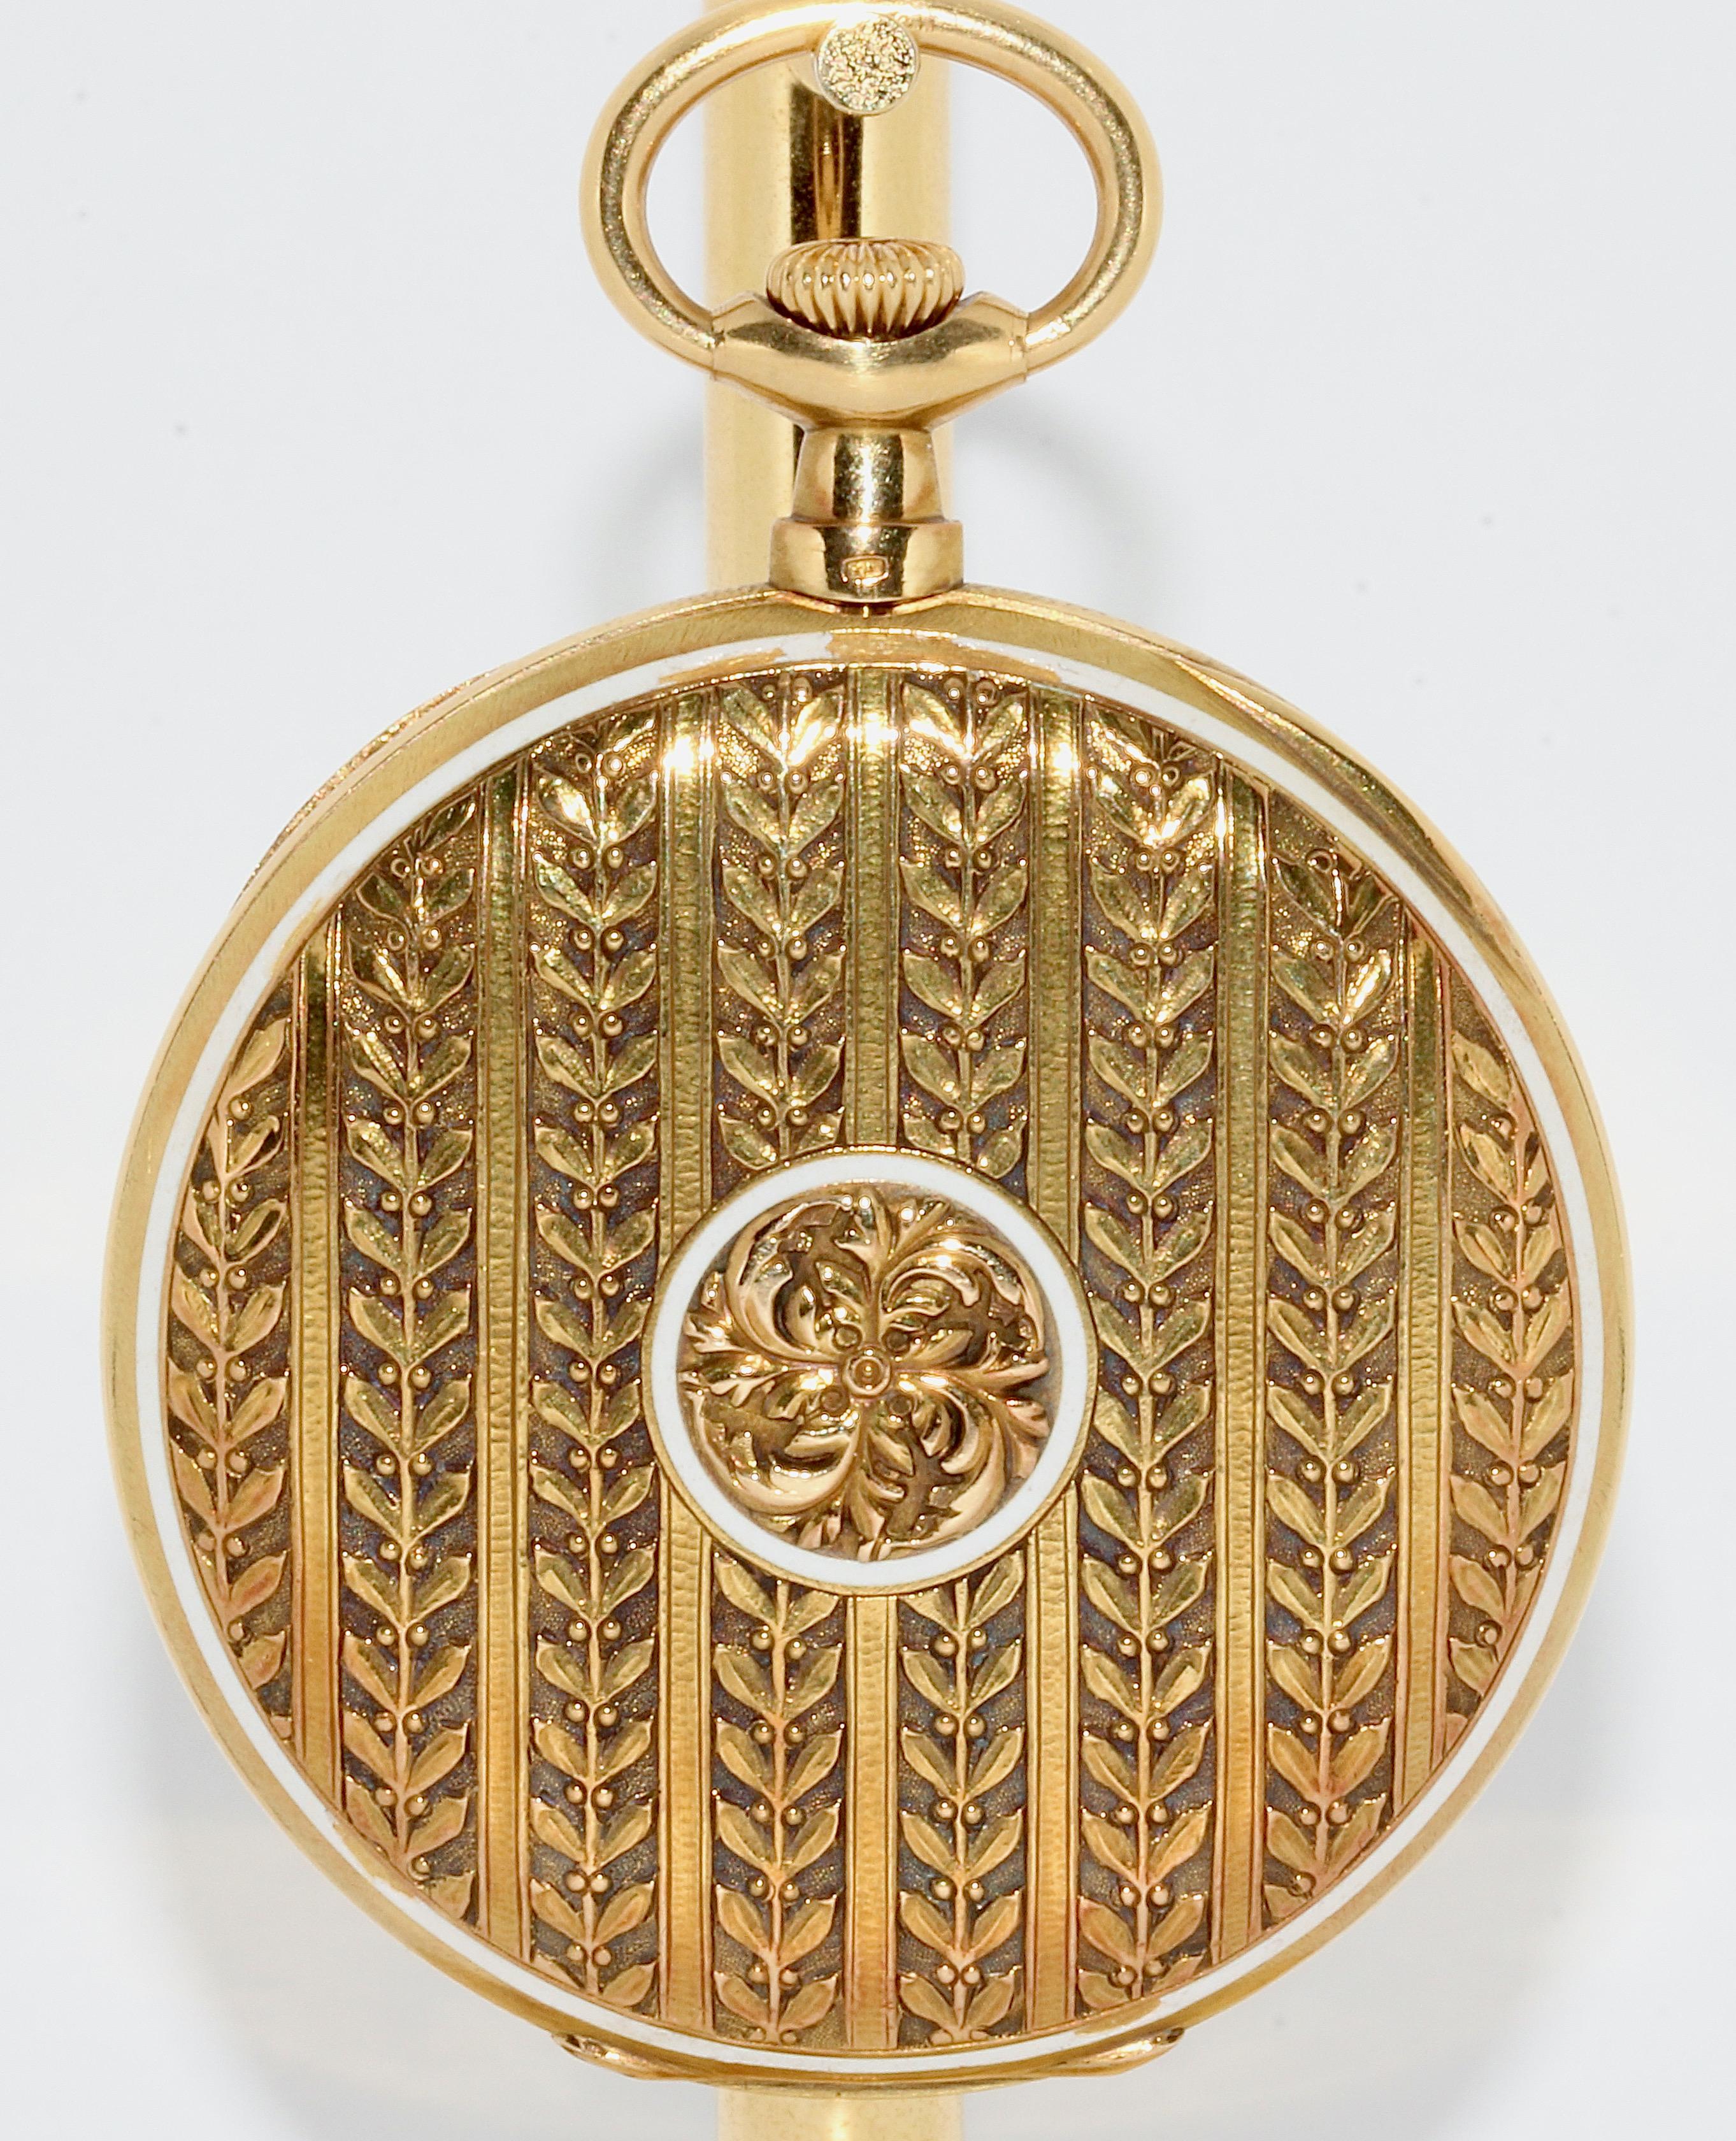 obtain the bronze pocket watch on customs